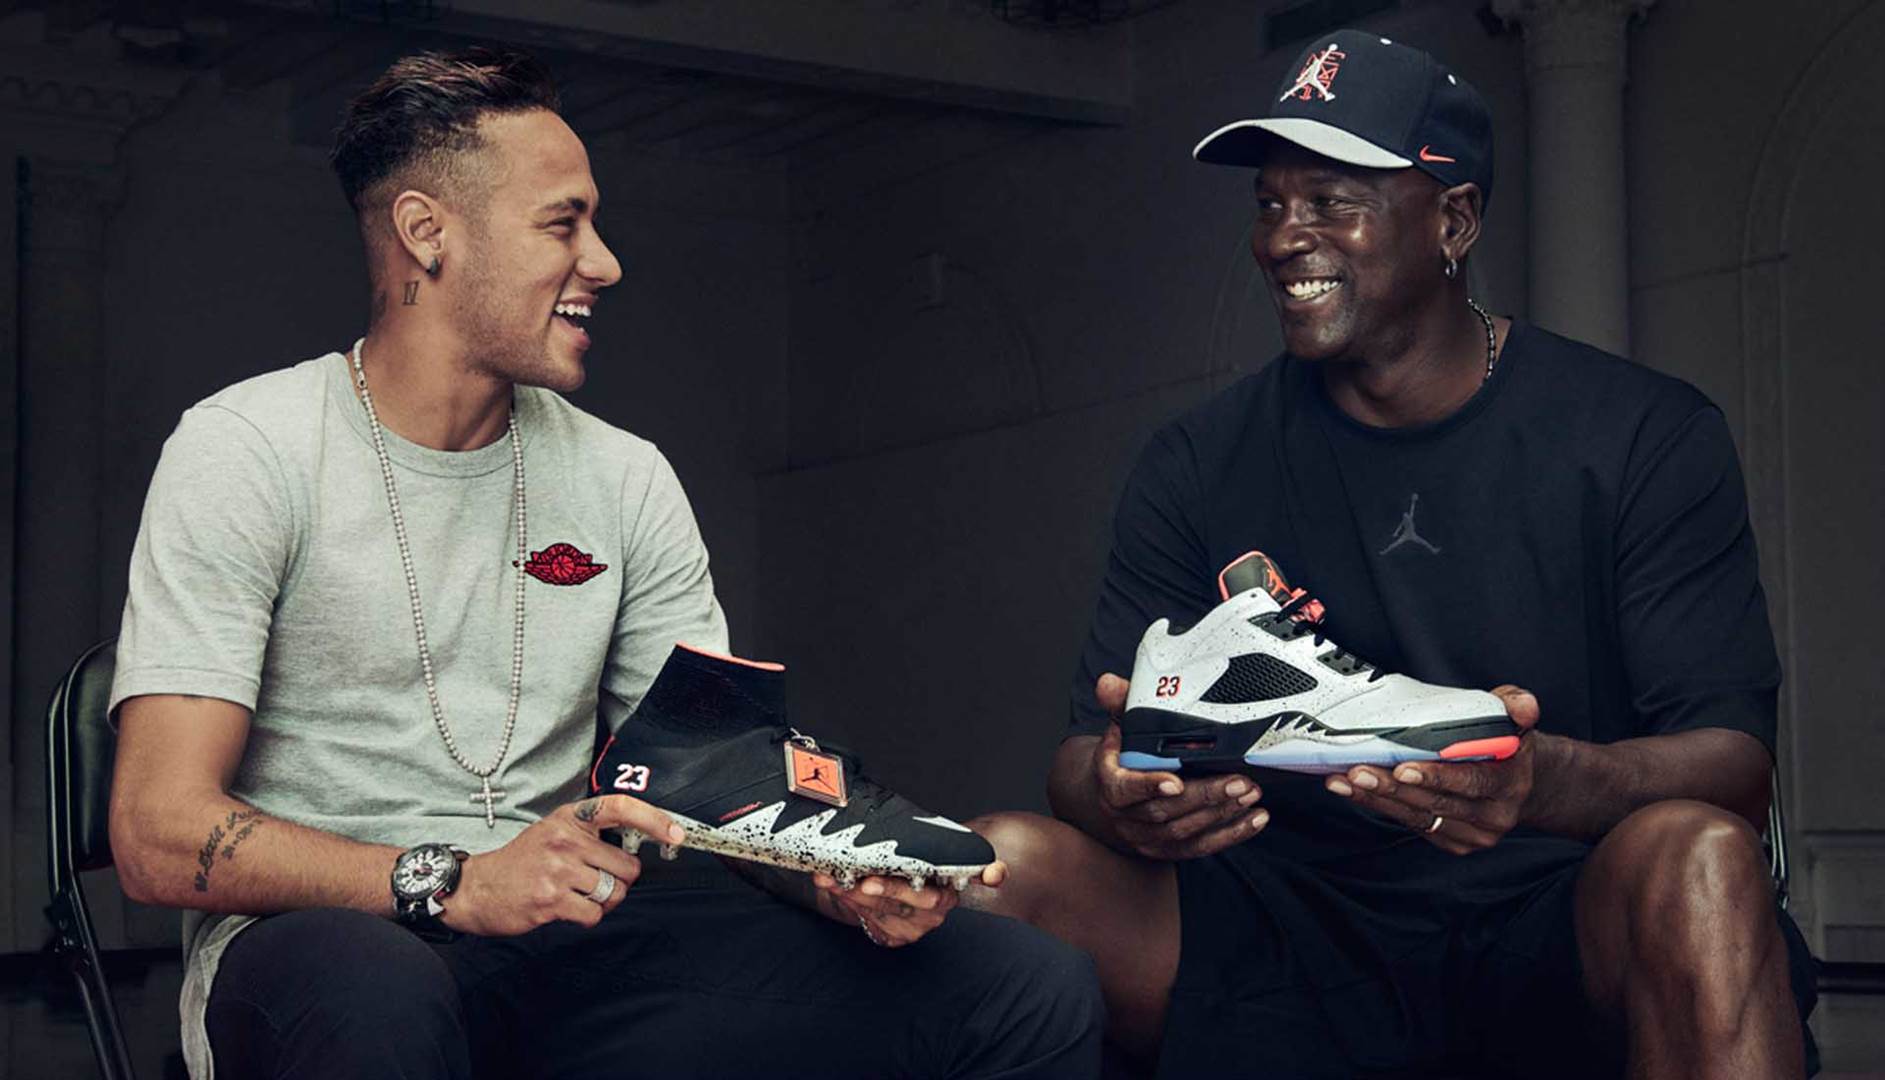 One-Of-A-Kind Nike Jordan Boots | Soccer Laduma